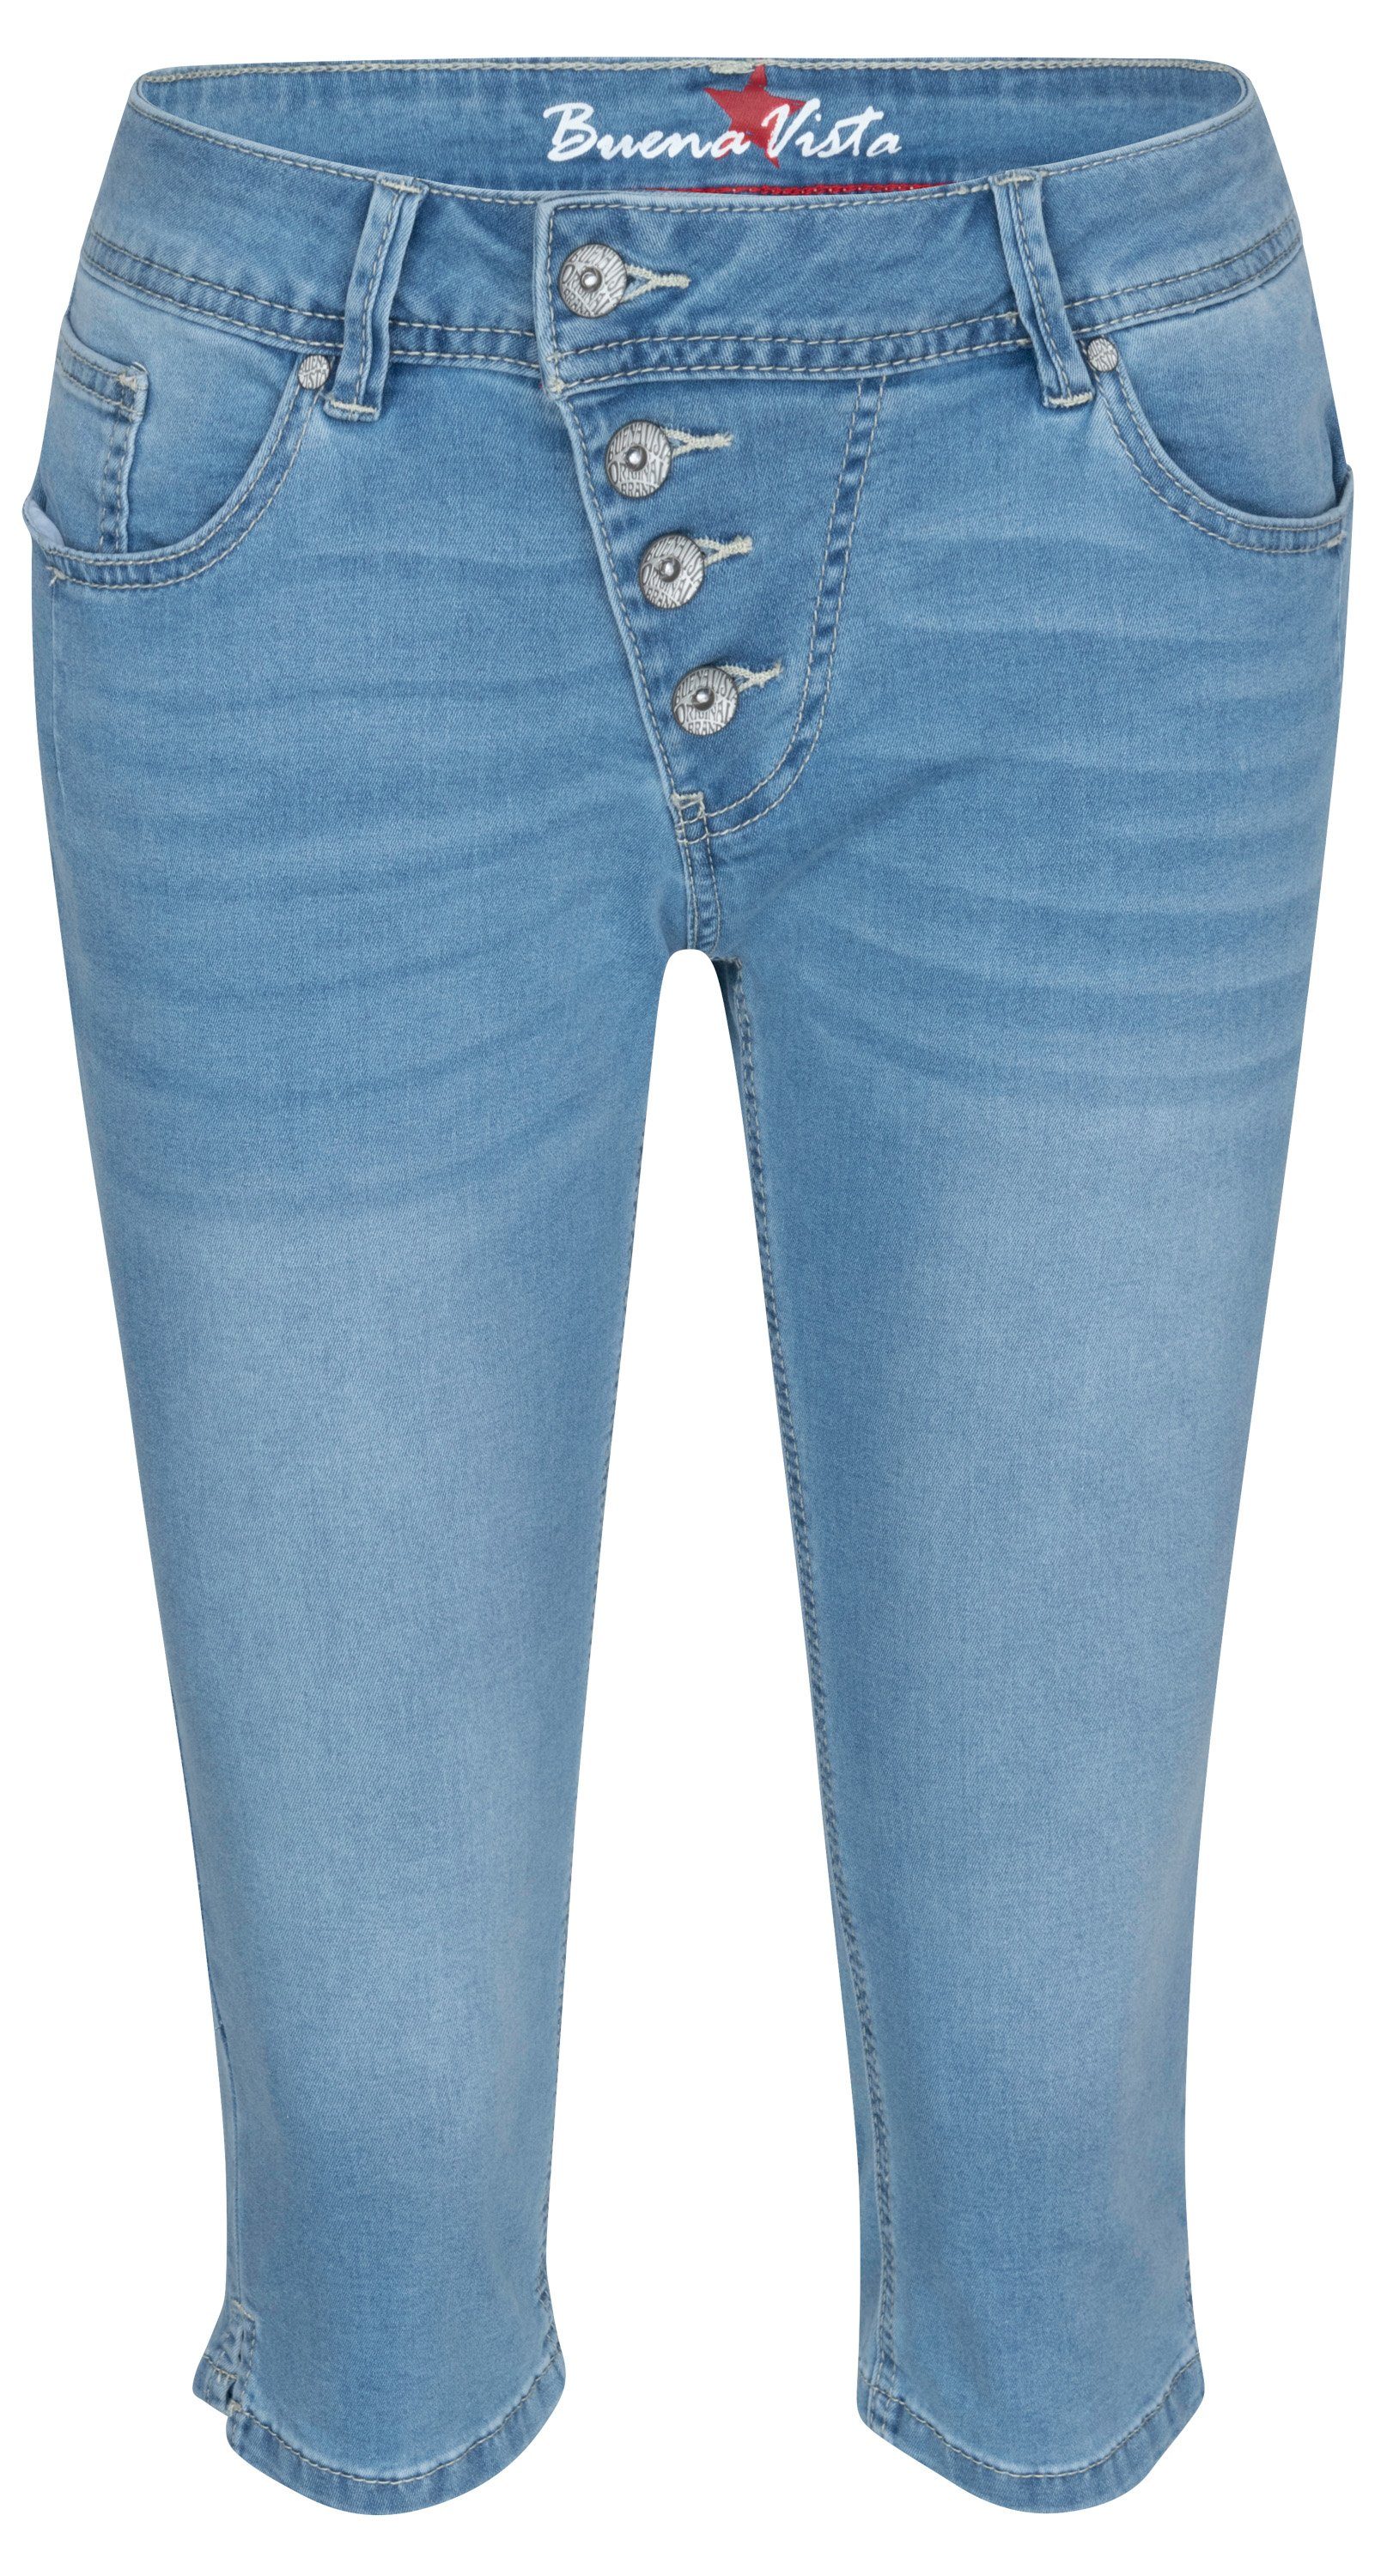 Buena Vista Stretch-Jeans BUENA VISTA MALIBU CAPRI charming blue 2304 B5232 102.8565 - Cozy